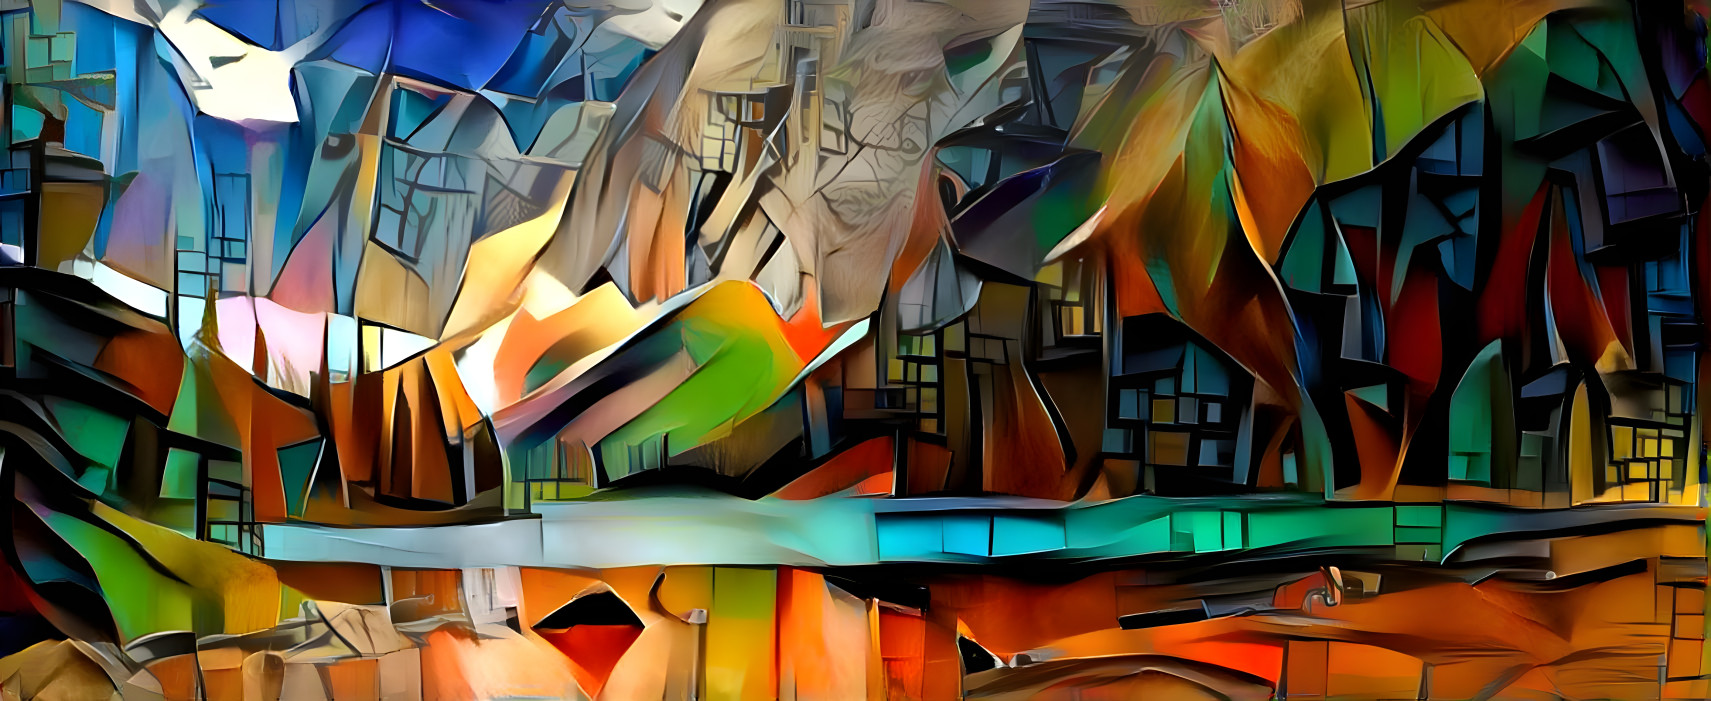 Mountain Lake Art - abstract ( cubism-like )